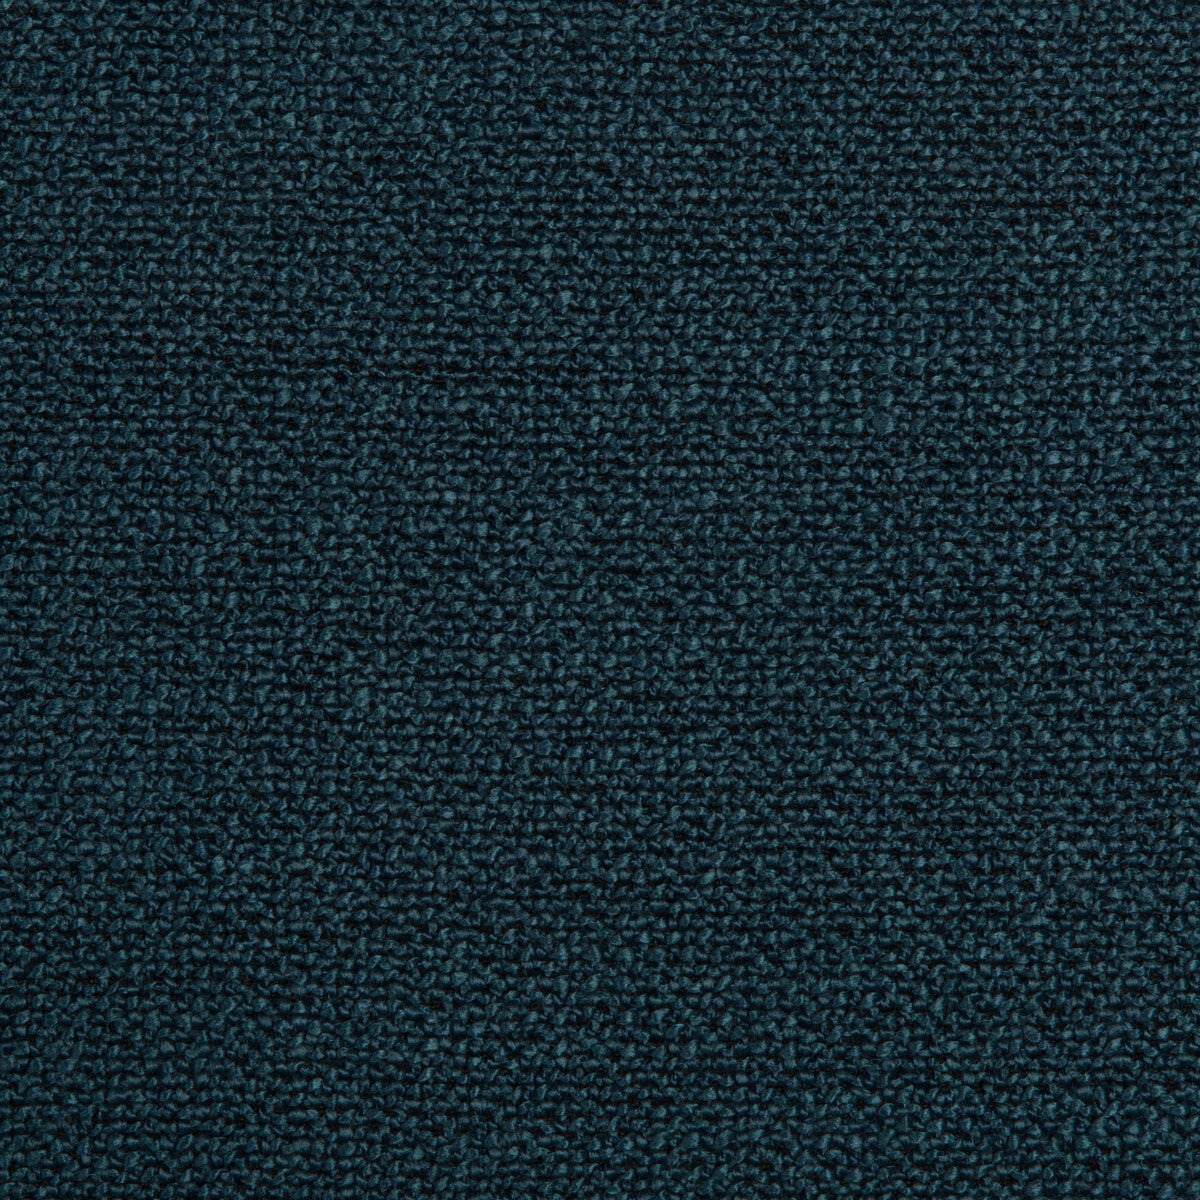 Kravet Smart fabric in 35379-550 color - pattern 35379.550.0 - by Kravet Smart in the Performance Kravetarmor collection